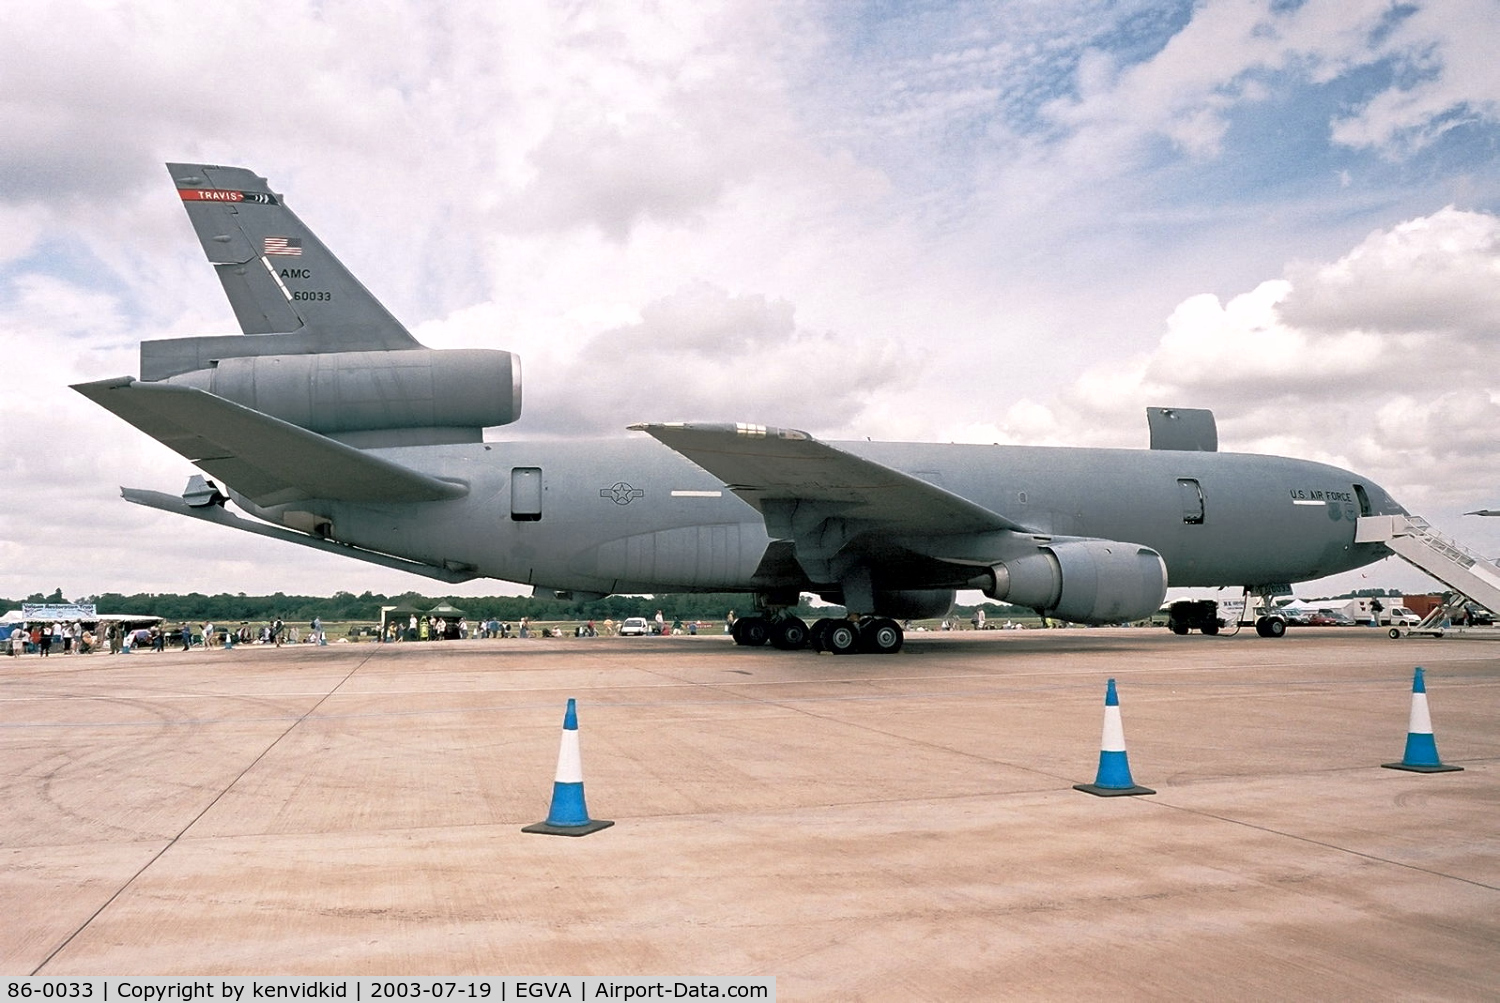 86-0033, 1986 McDonnell Douglas KC-10A Extender C/N 48246, USAF at RIAT.